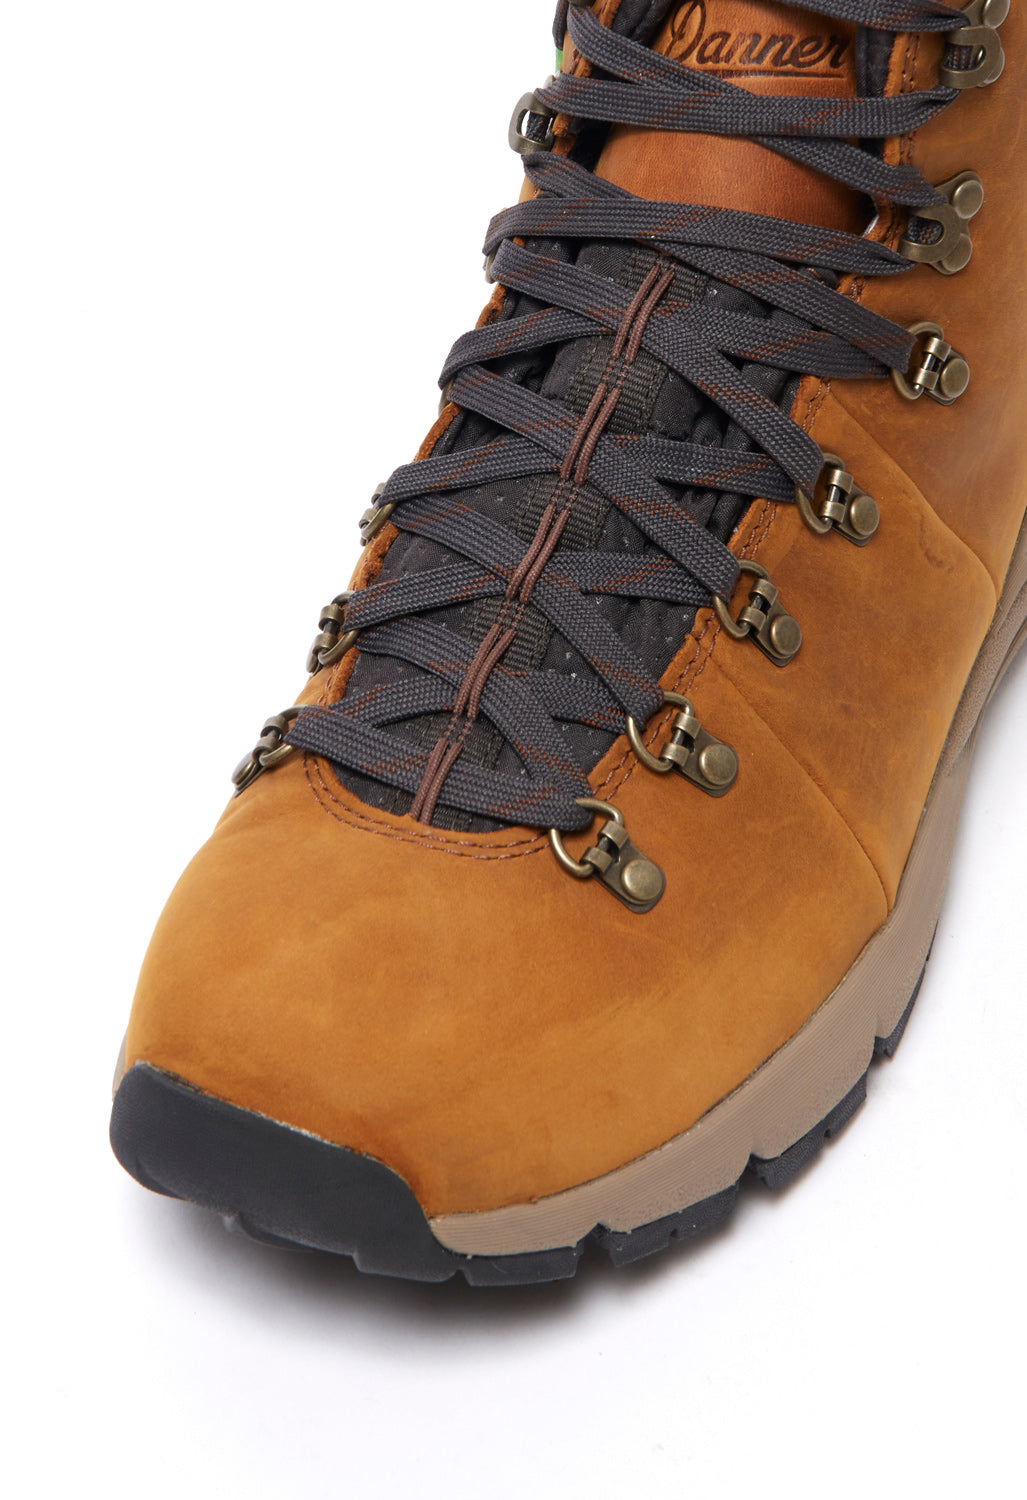 Danner Mountain 600 4.5" Men's Boots - Rich Brown